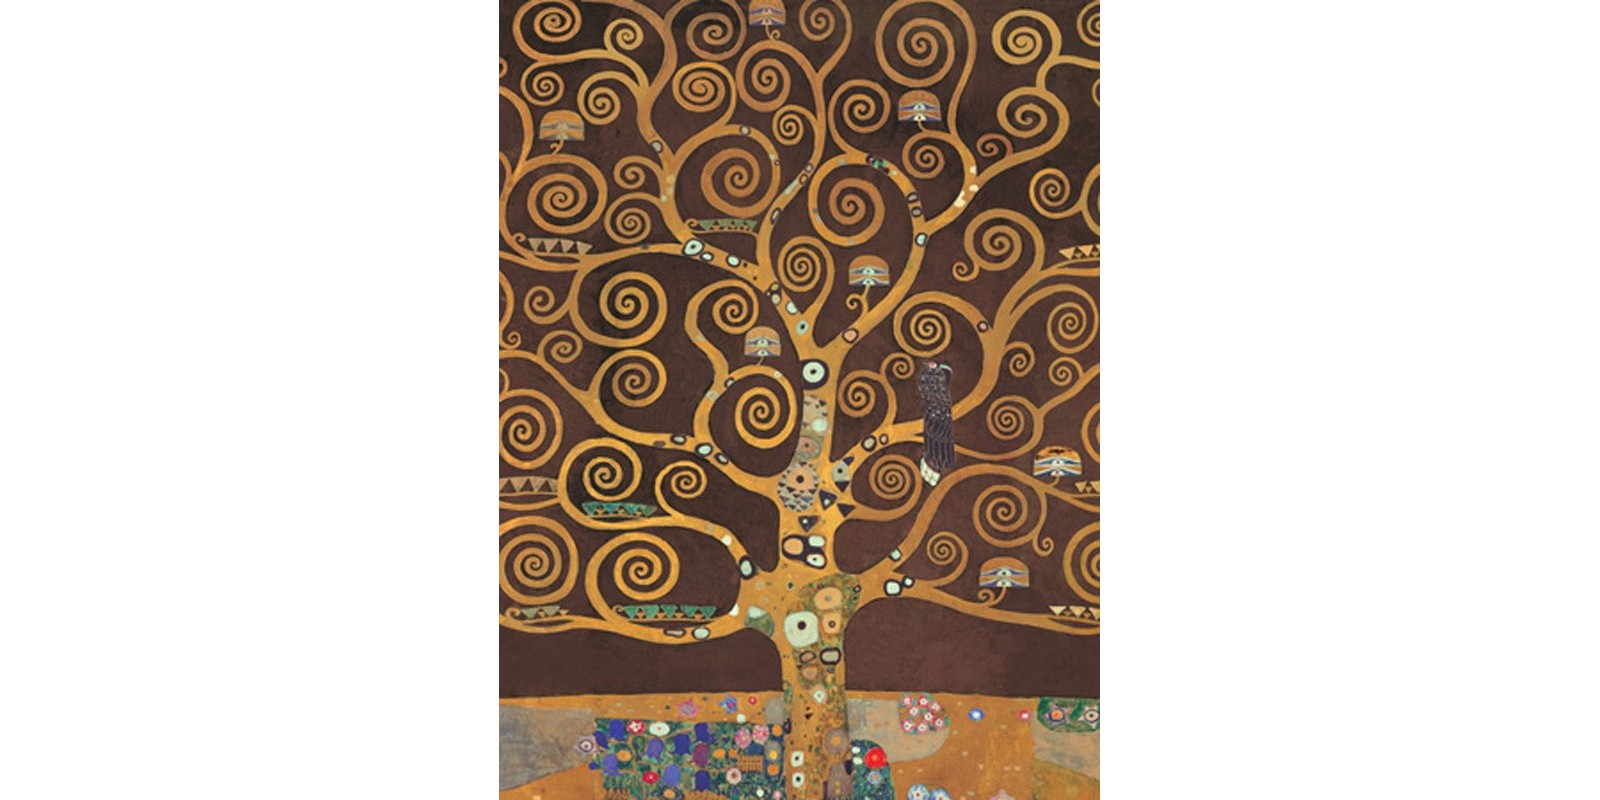 Gustav Klimt - Tree of Life (Brown Variation) (detail)